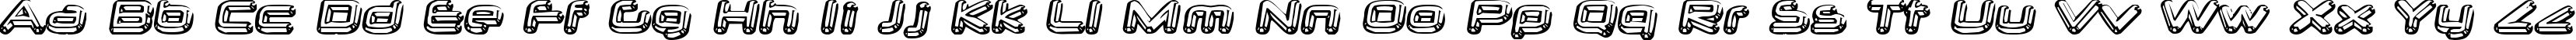 Пример написания английского алфавита шрифтом Neurochrome